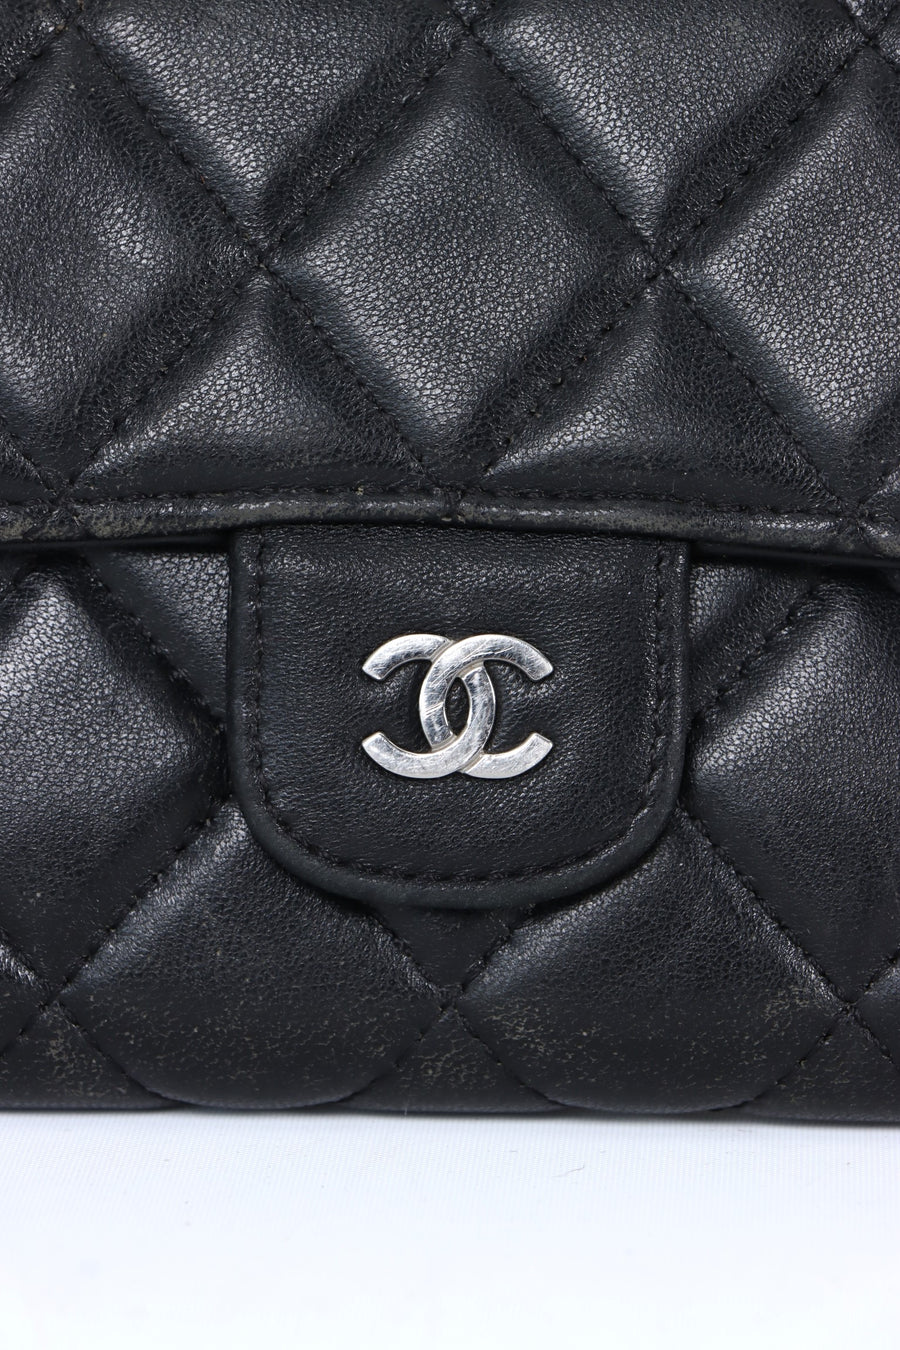 REPLICA Chanel Classic Flap Long Wallet